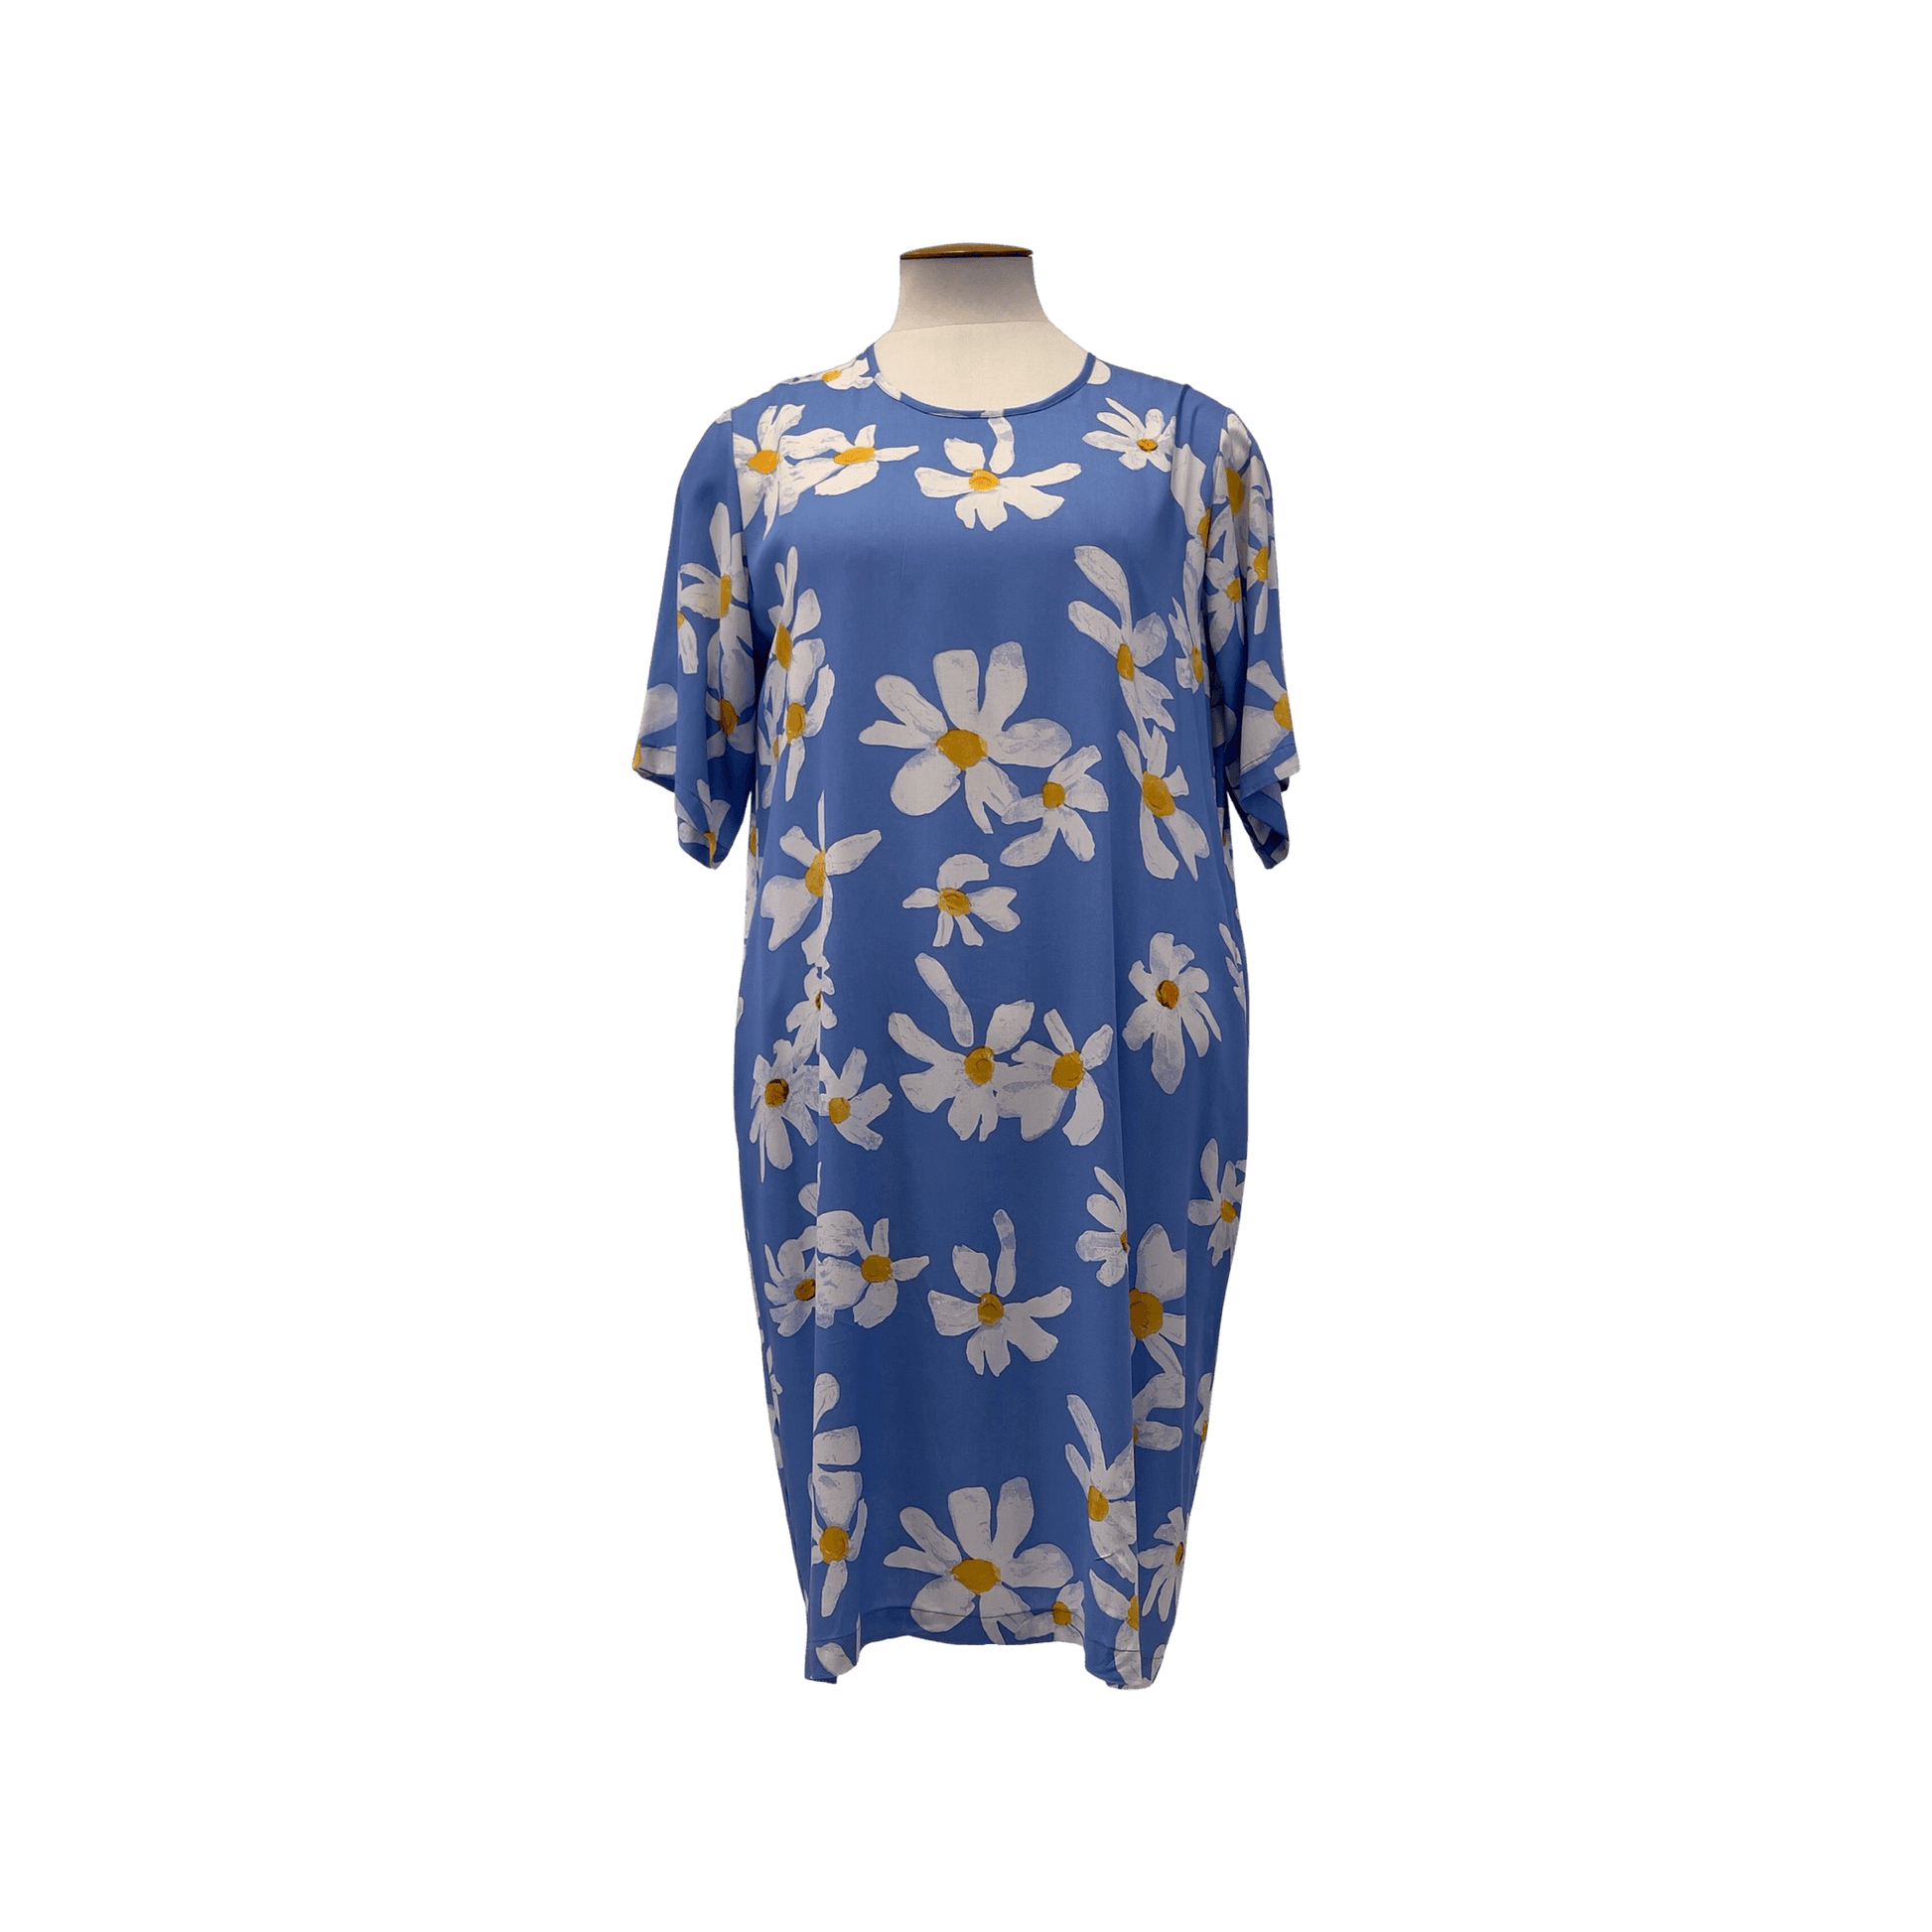 Bloom Clothing NZ,FRESH DAISY DRESS -Sky Blue,$229.00,